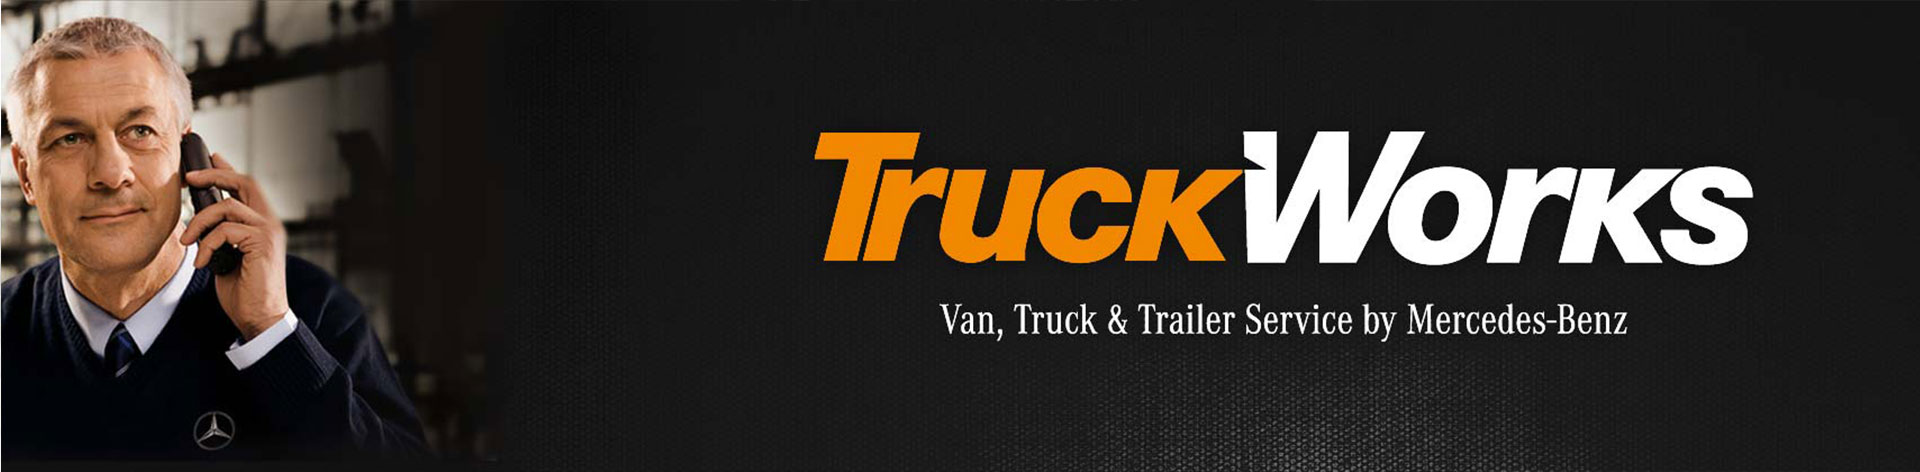 TruckWorks - Van, Truck & Trailer Service by Mercedes-Benz